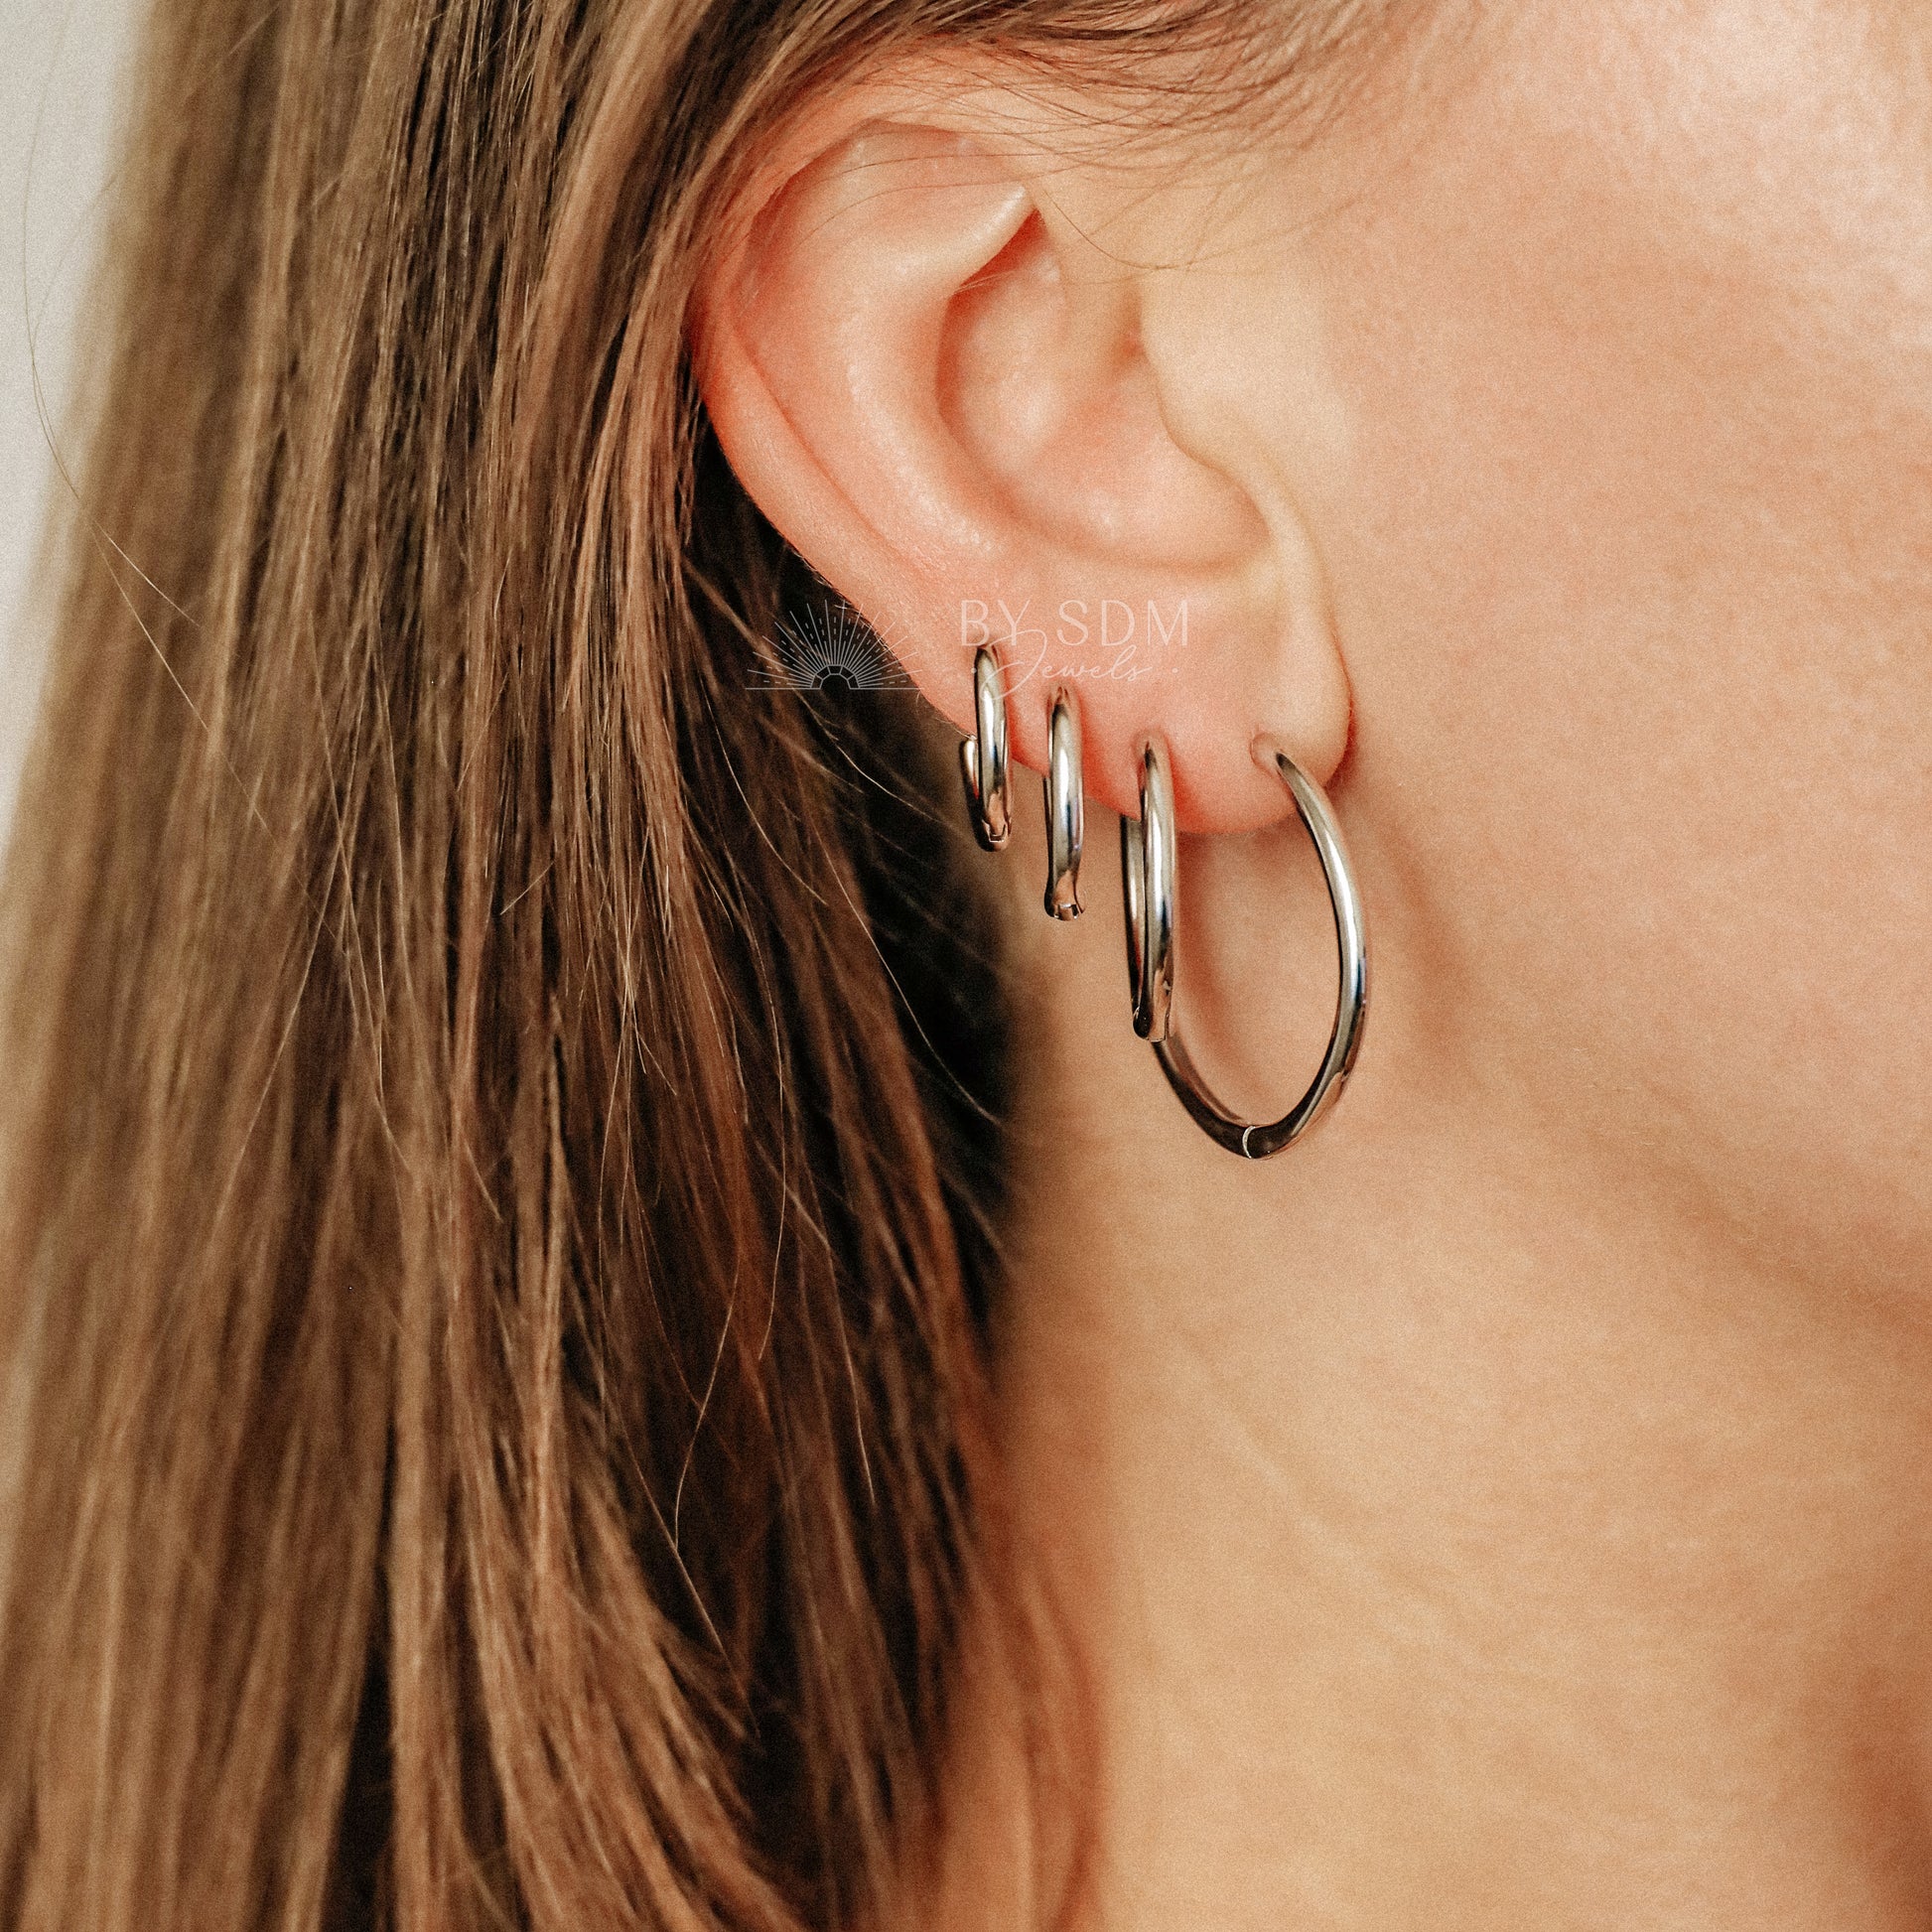 925 Sterling Silver Hoop Earrings Rounded Huggie Conch Cartilage Earrings Chunky Thick Hoop Earrings in Sizes 22 mm 18 mm 16 mm 11 mm 9 mm